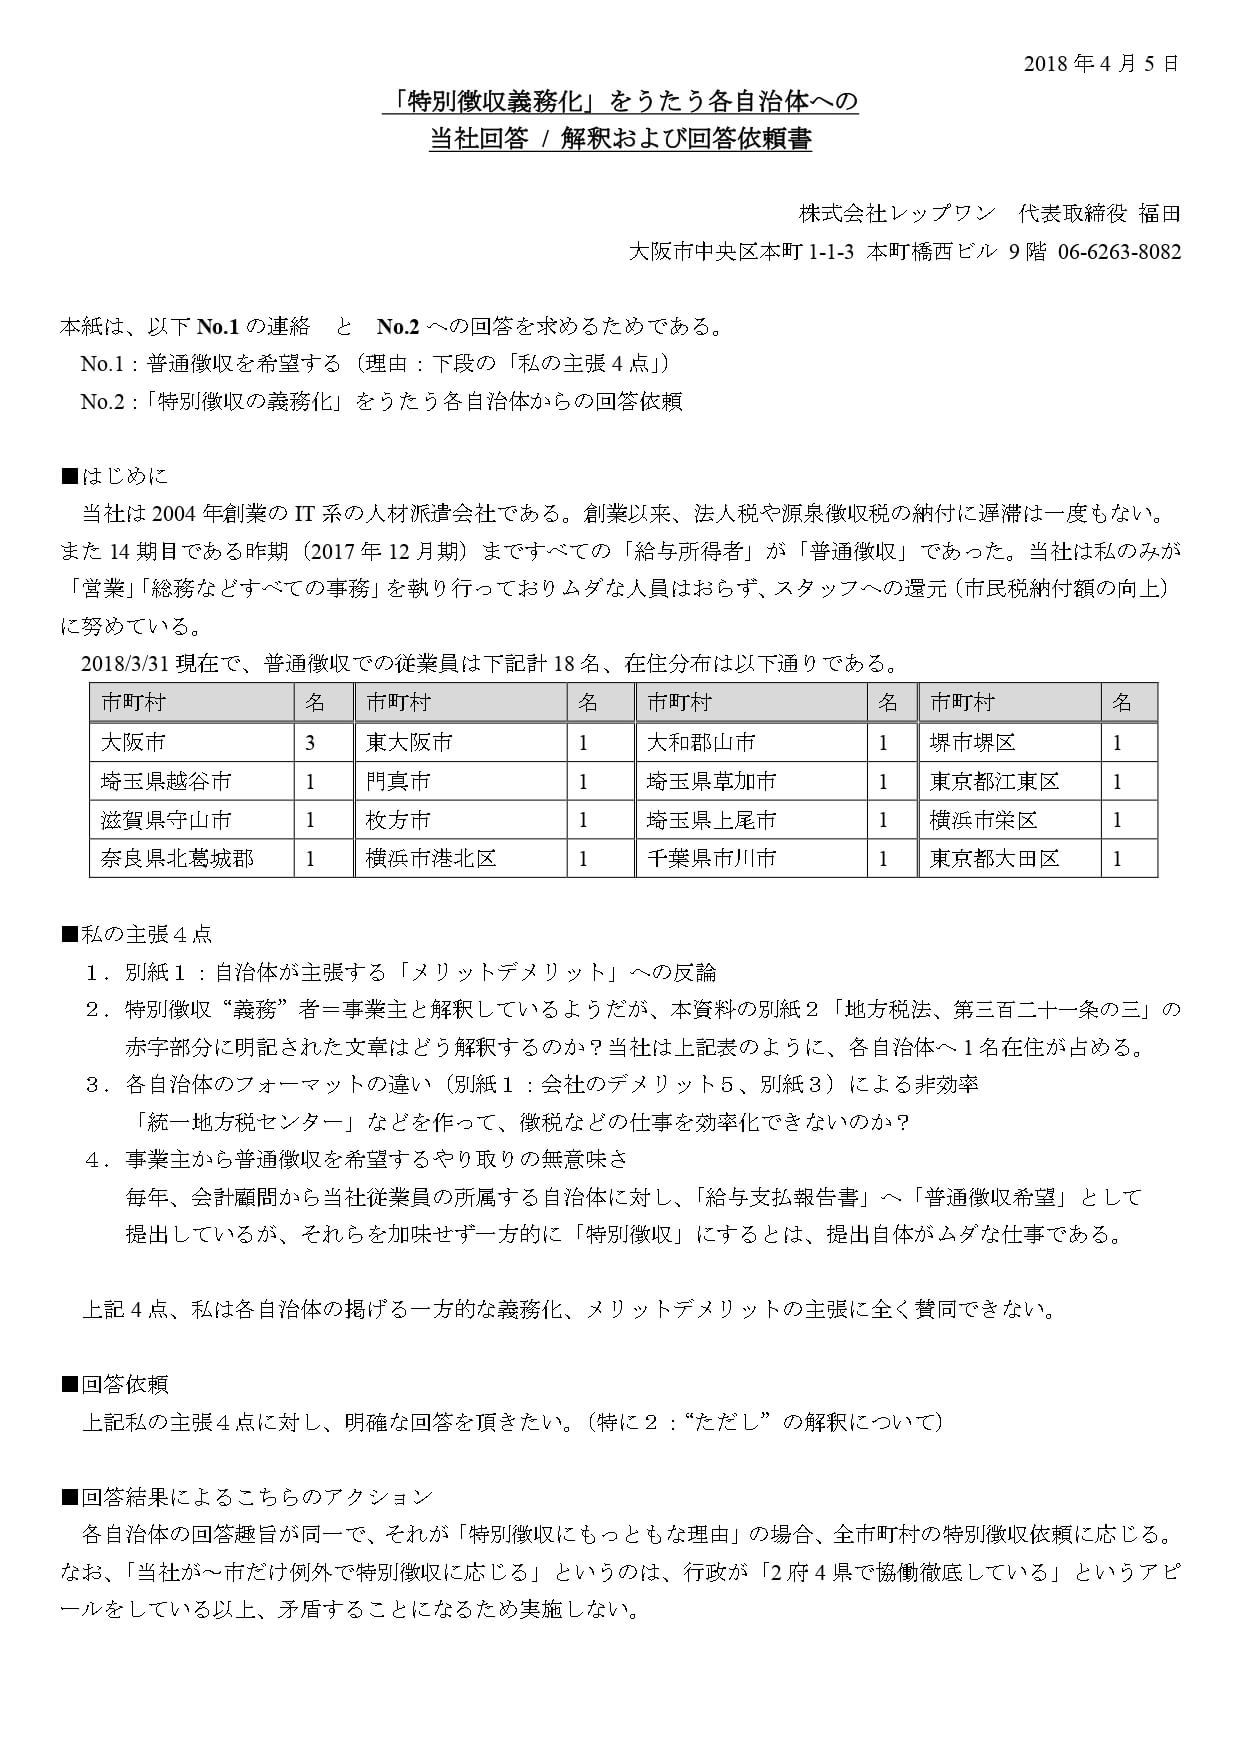 /data_fukuta/image_pdf/1804_tokucho